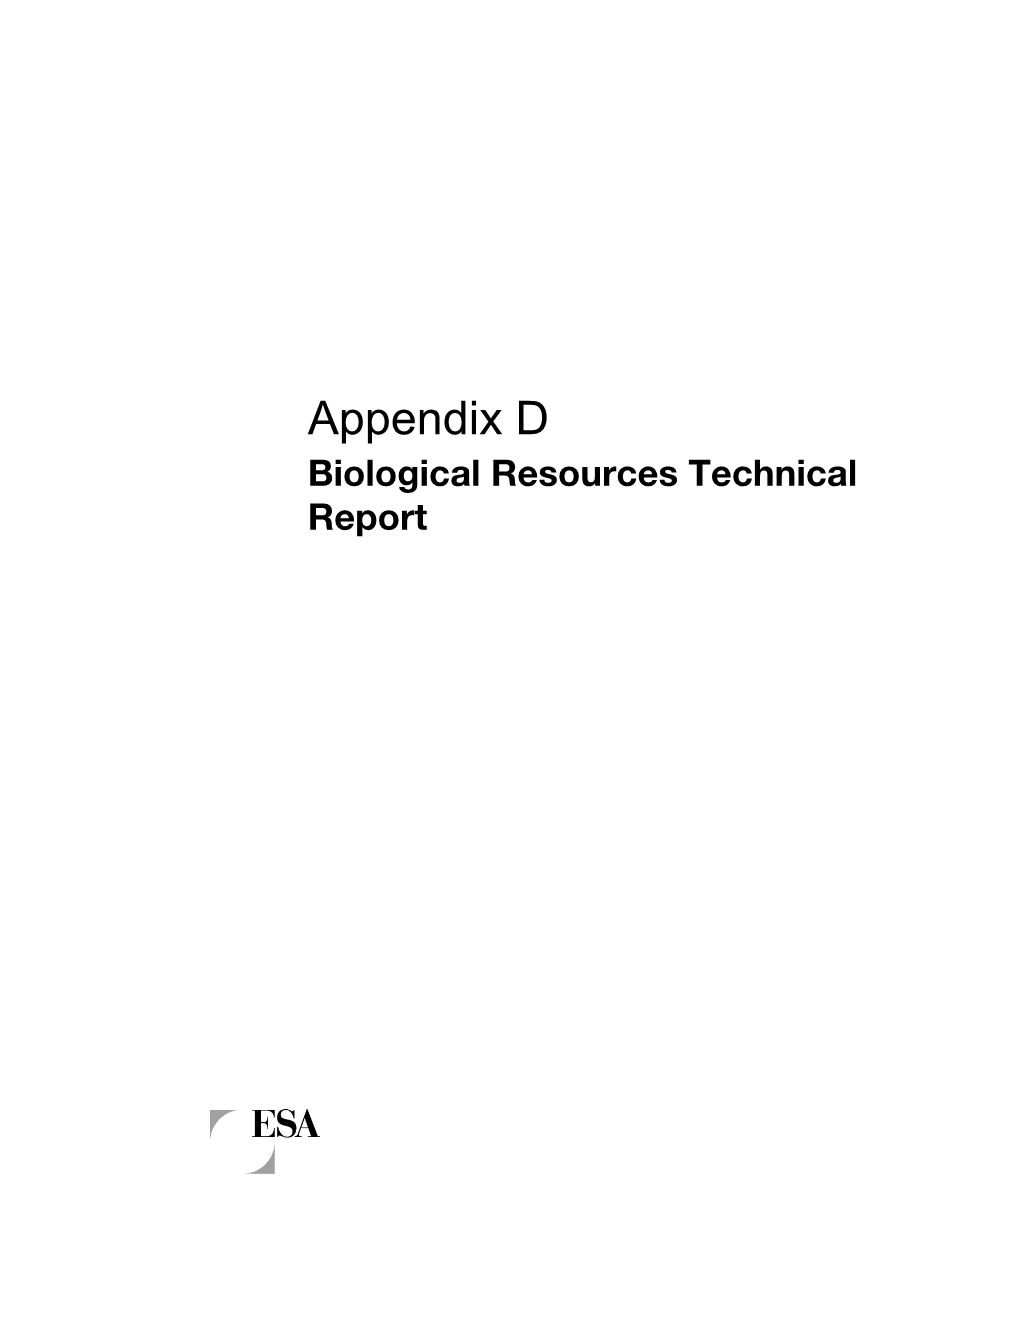 Appendix D Biological Resources Technical Report